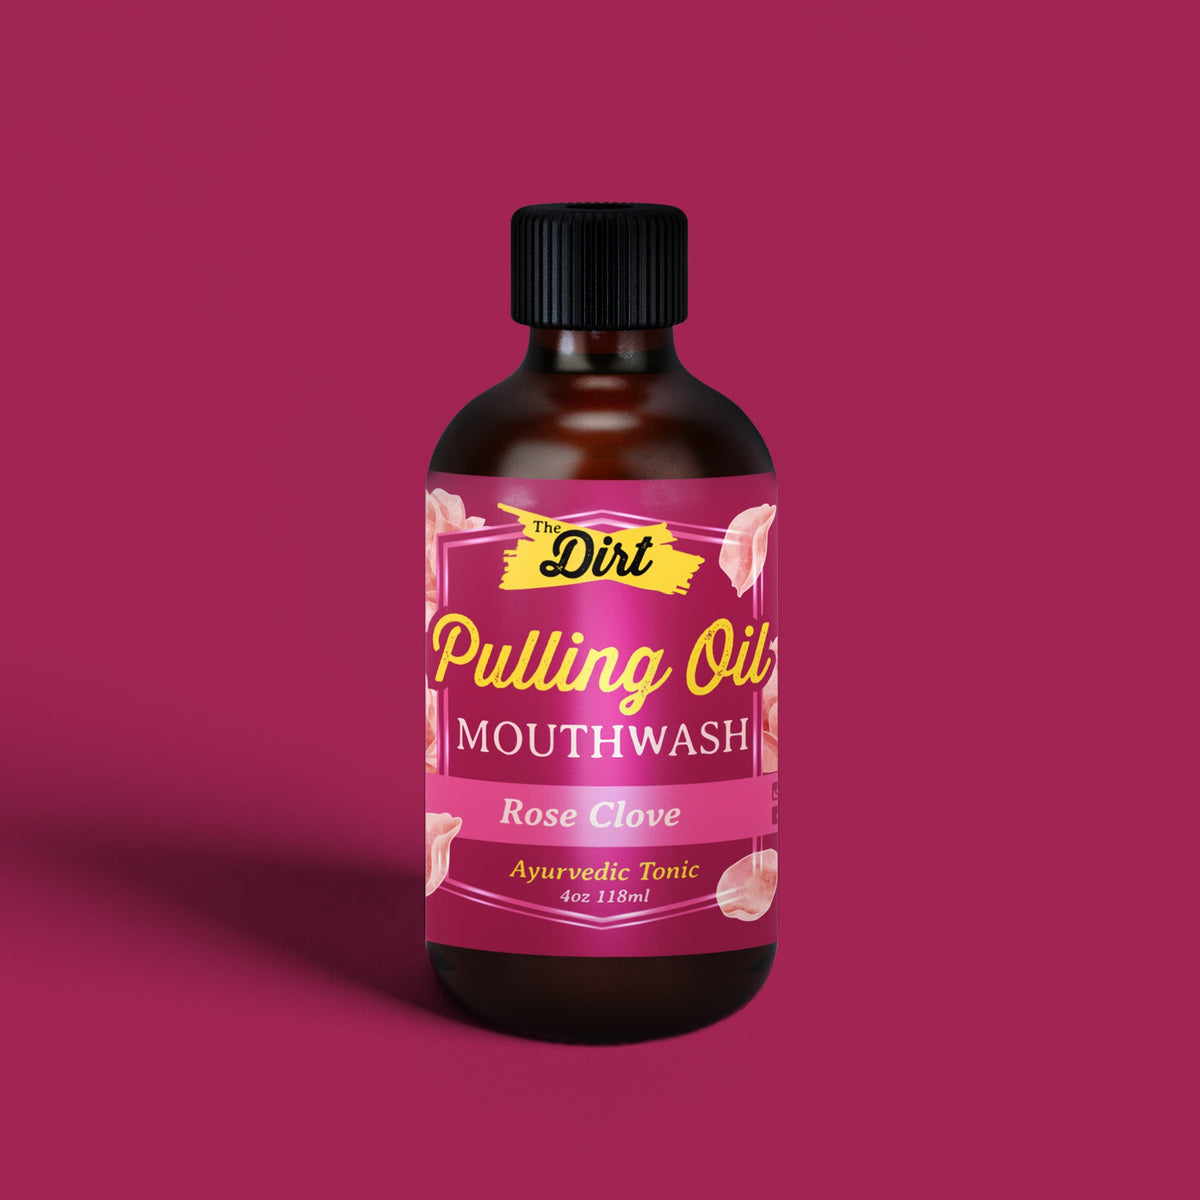 Oil Pulling Mouthwash - The Dirt - Super Natural Personal Care 4oz / Rose Clove Mint Oral Care